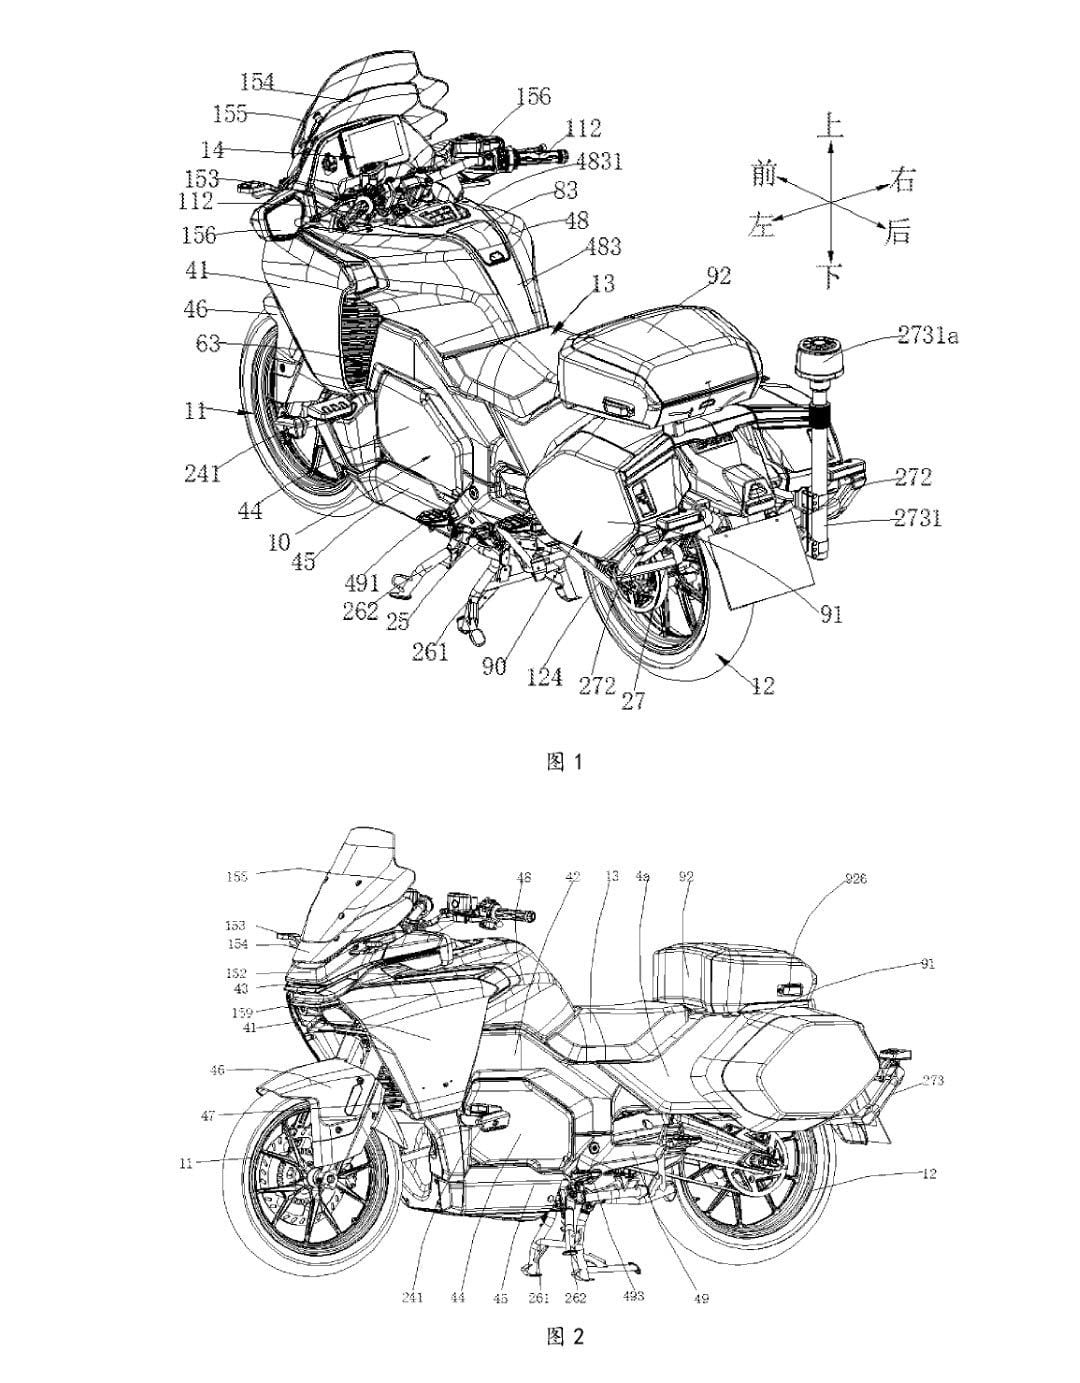 CFMoto AKA KTM built an electric bike?